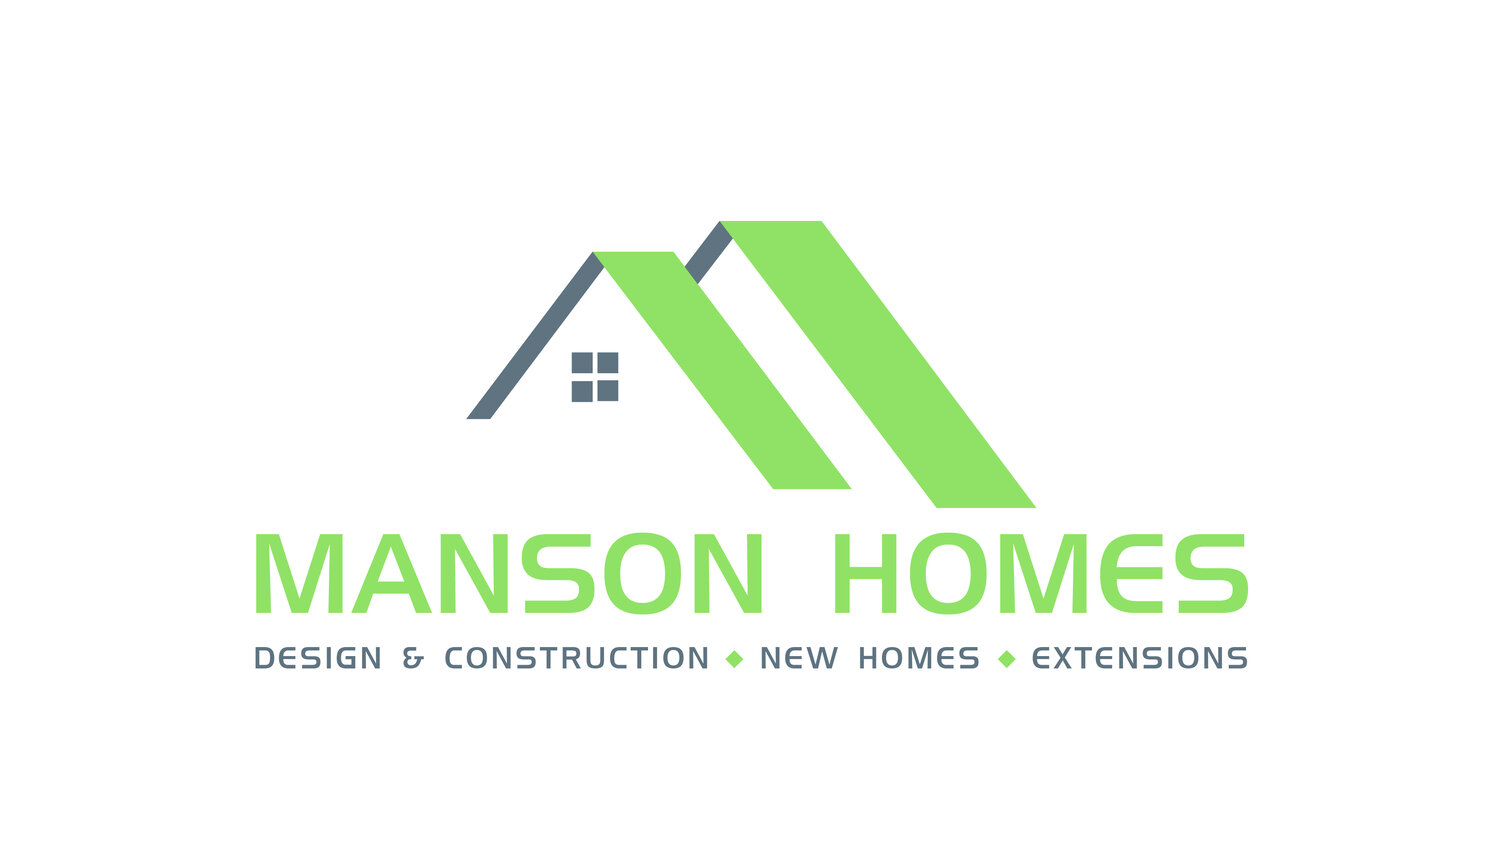 Manson Homes - Brisbane Builders 